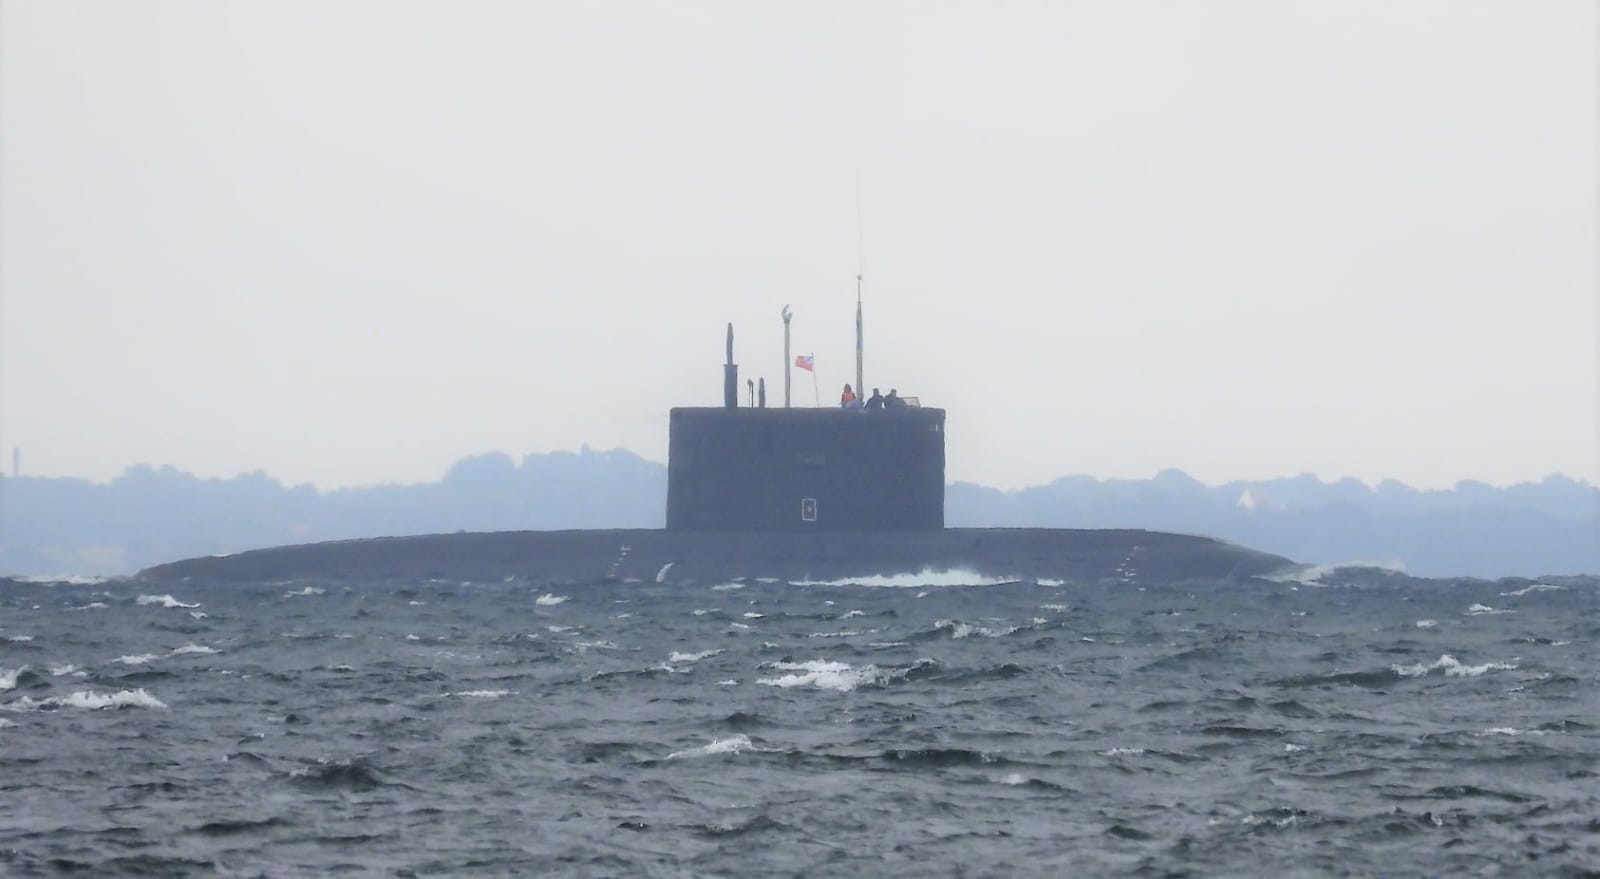 diesel-electric attack submarine Petropavlovsk-Kamchatsky